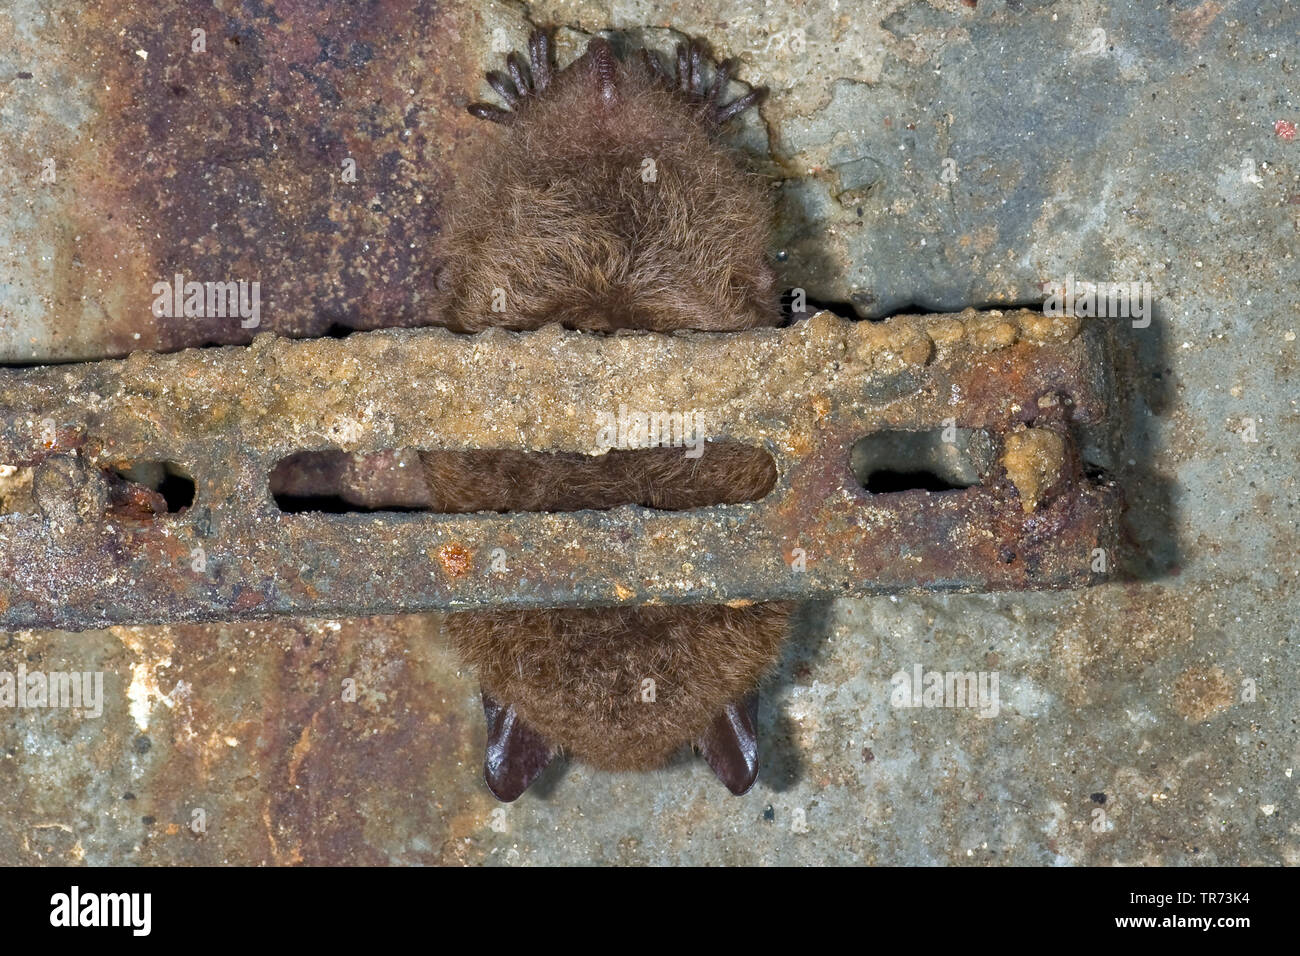 Metal bat hi-res stock photography and images - Alamy